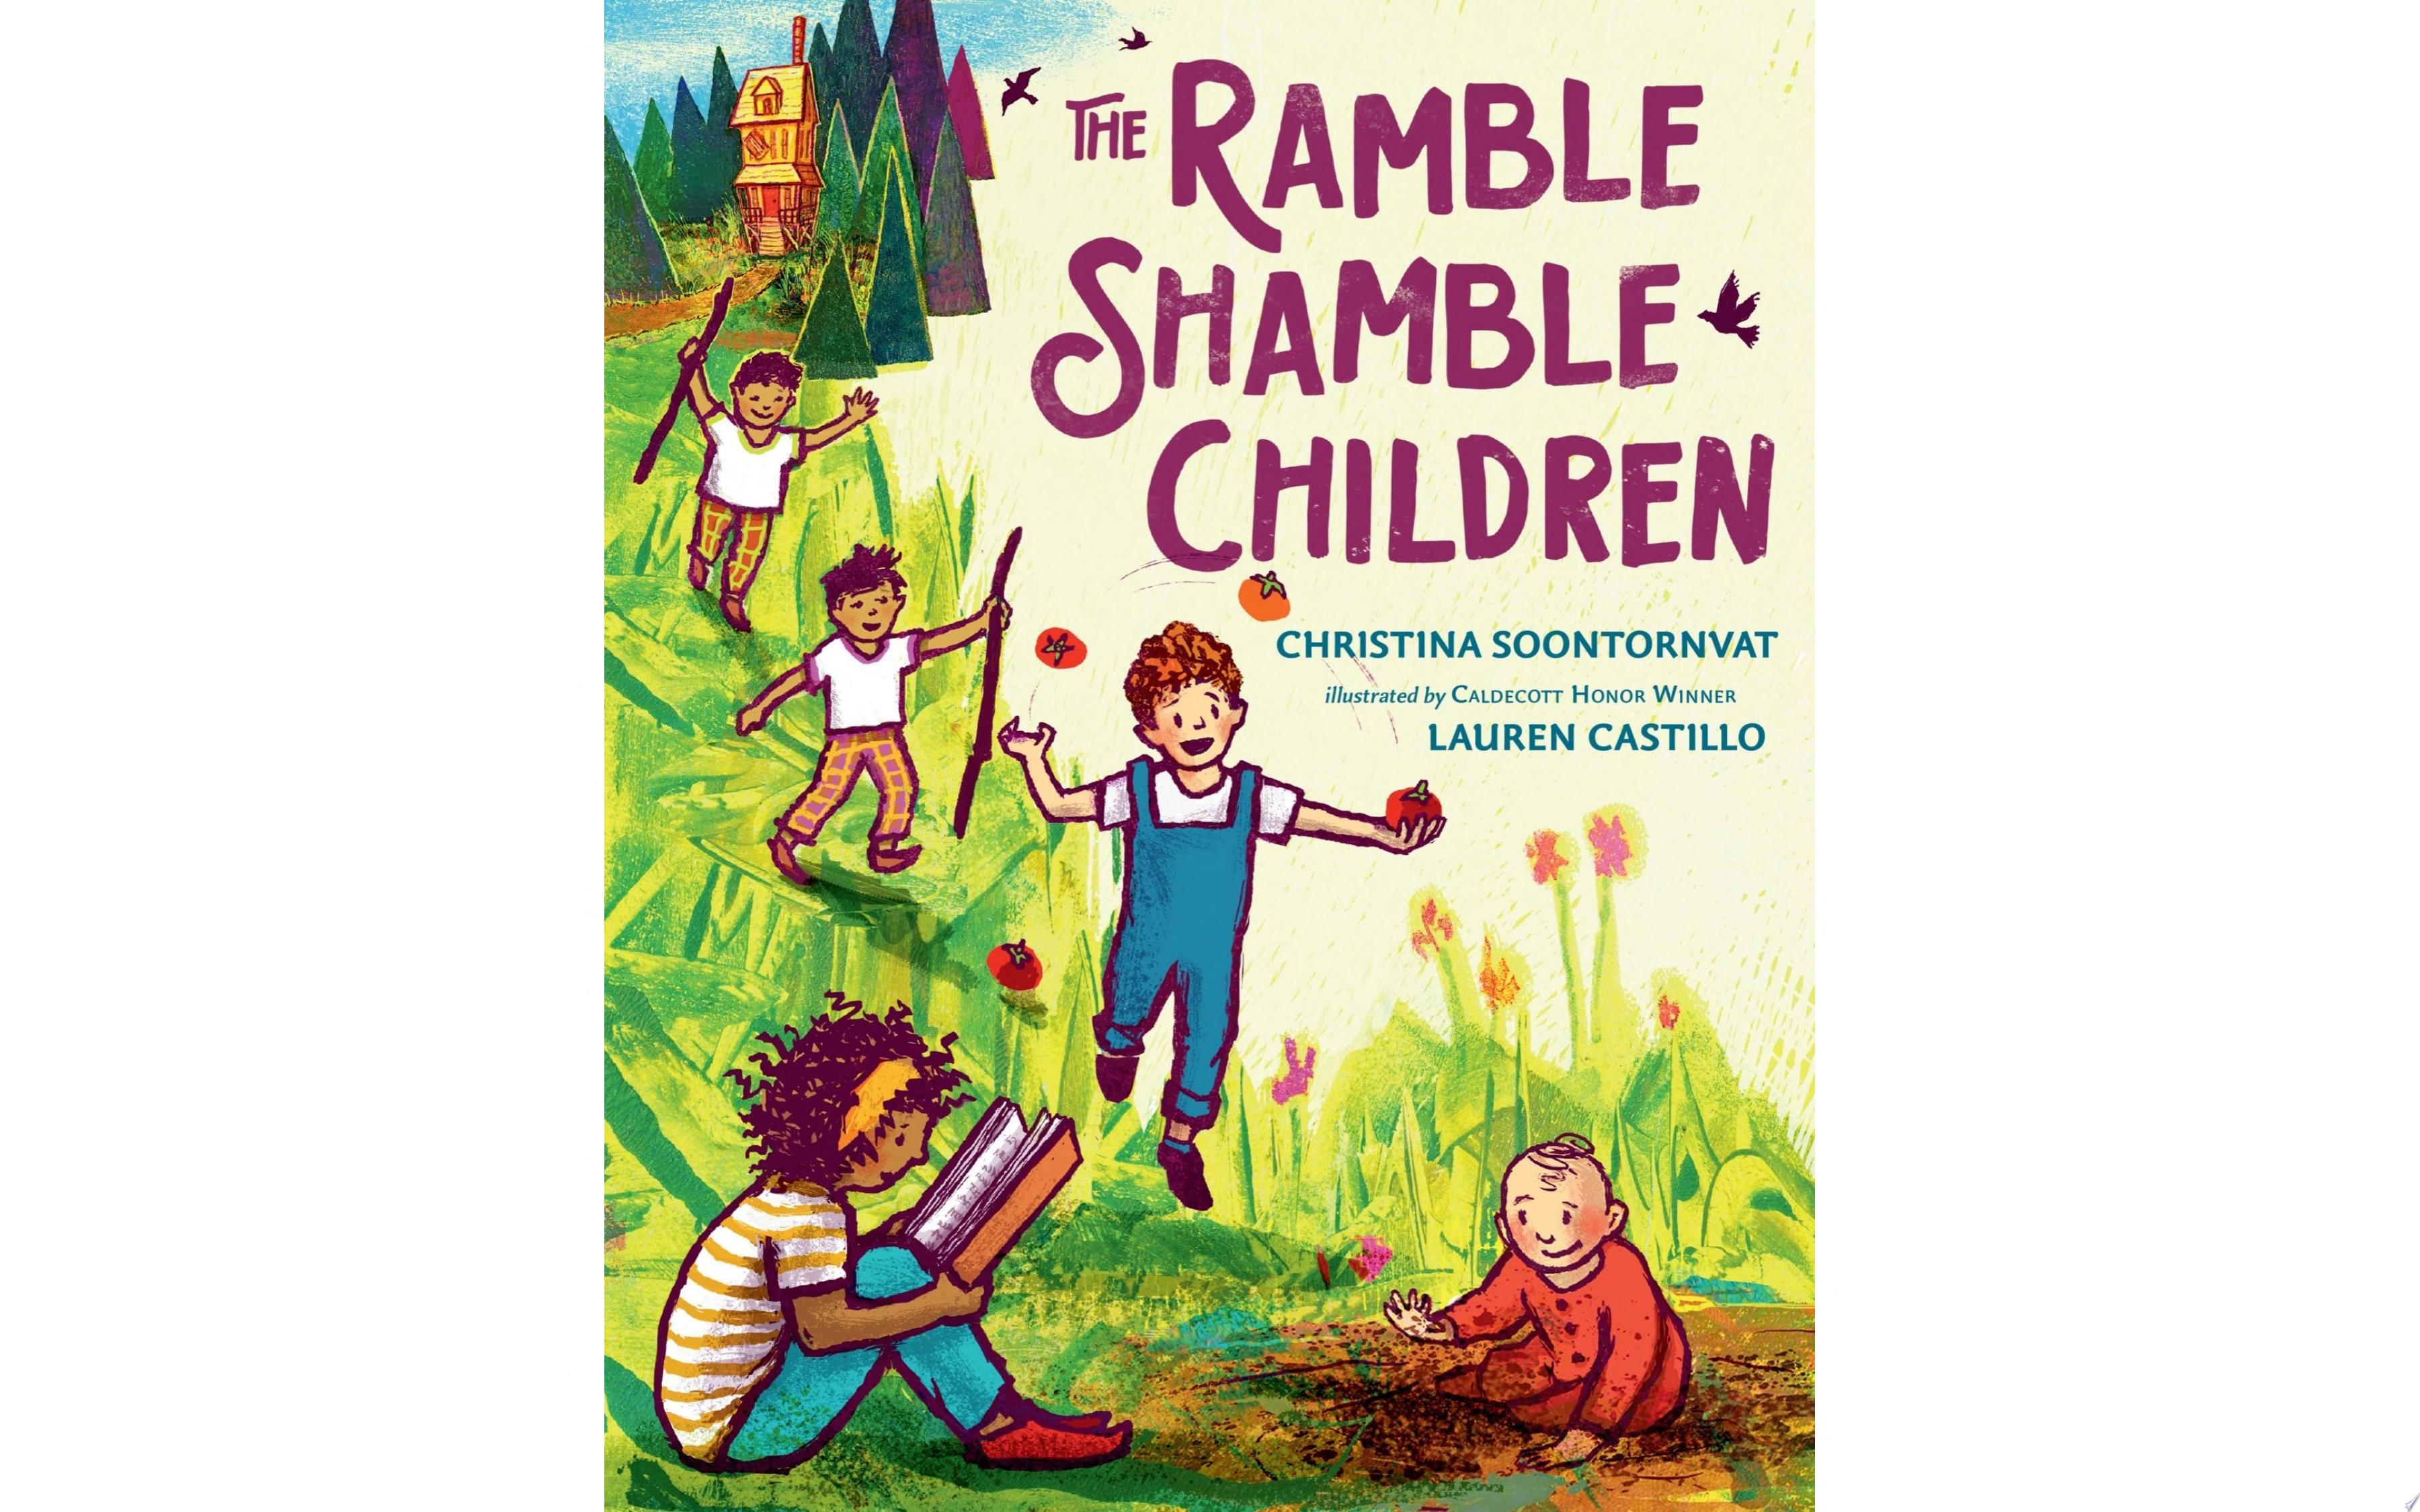 Image for "The Ramble Shamble Children"